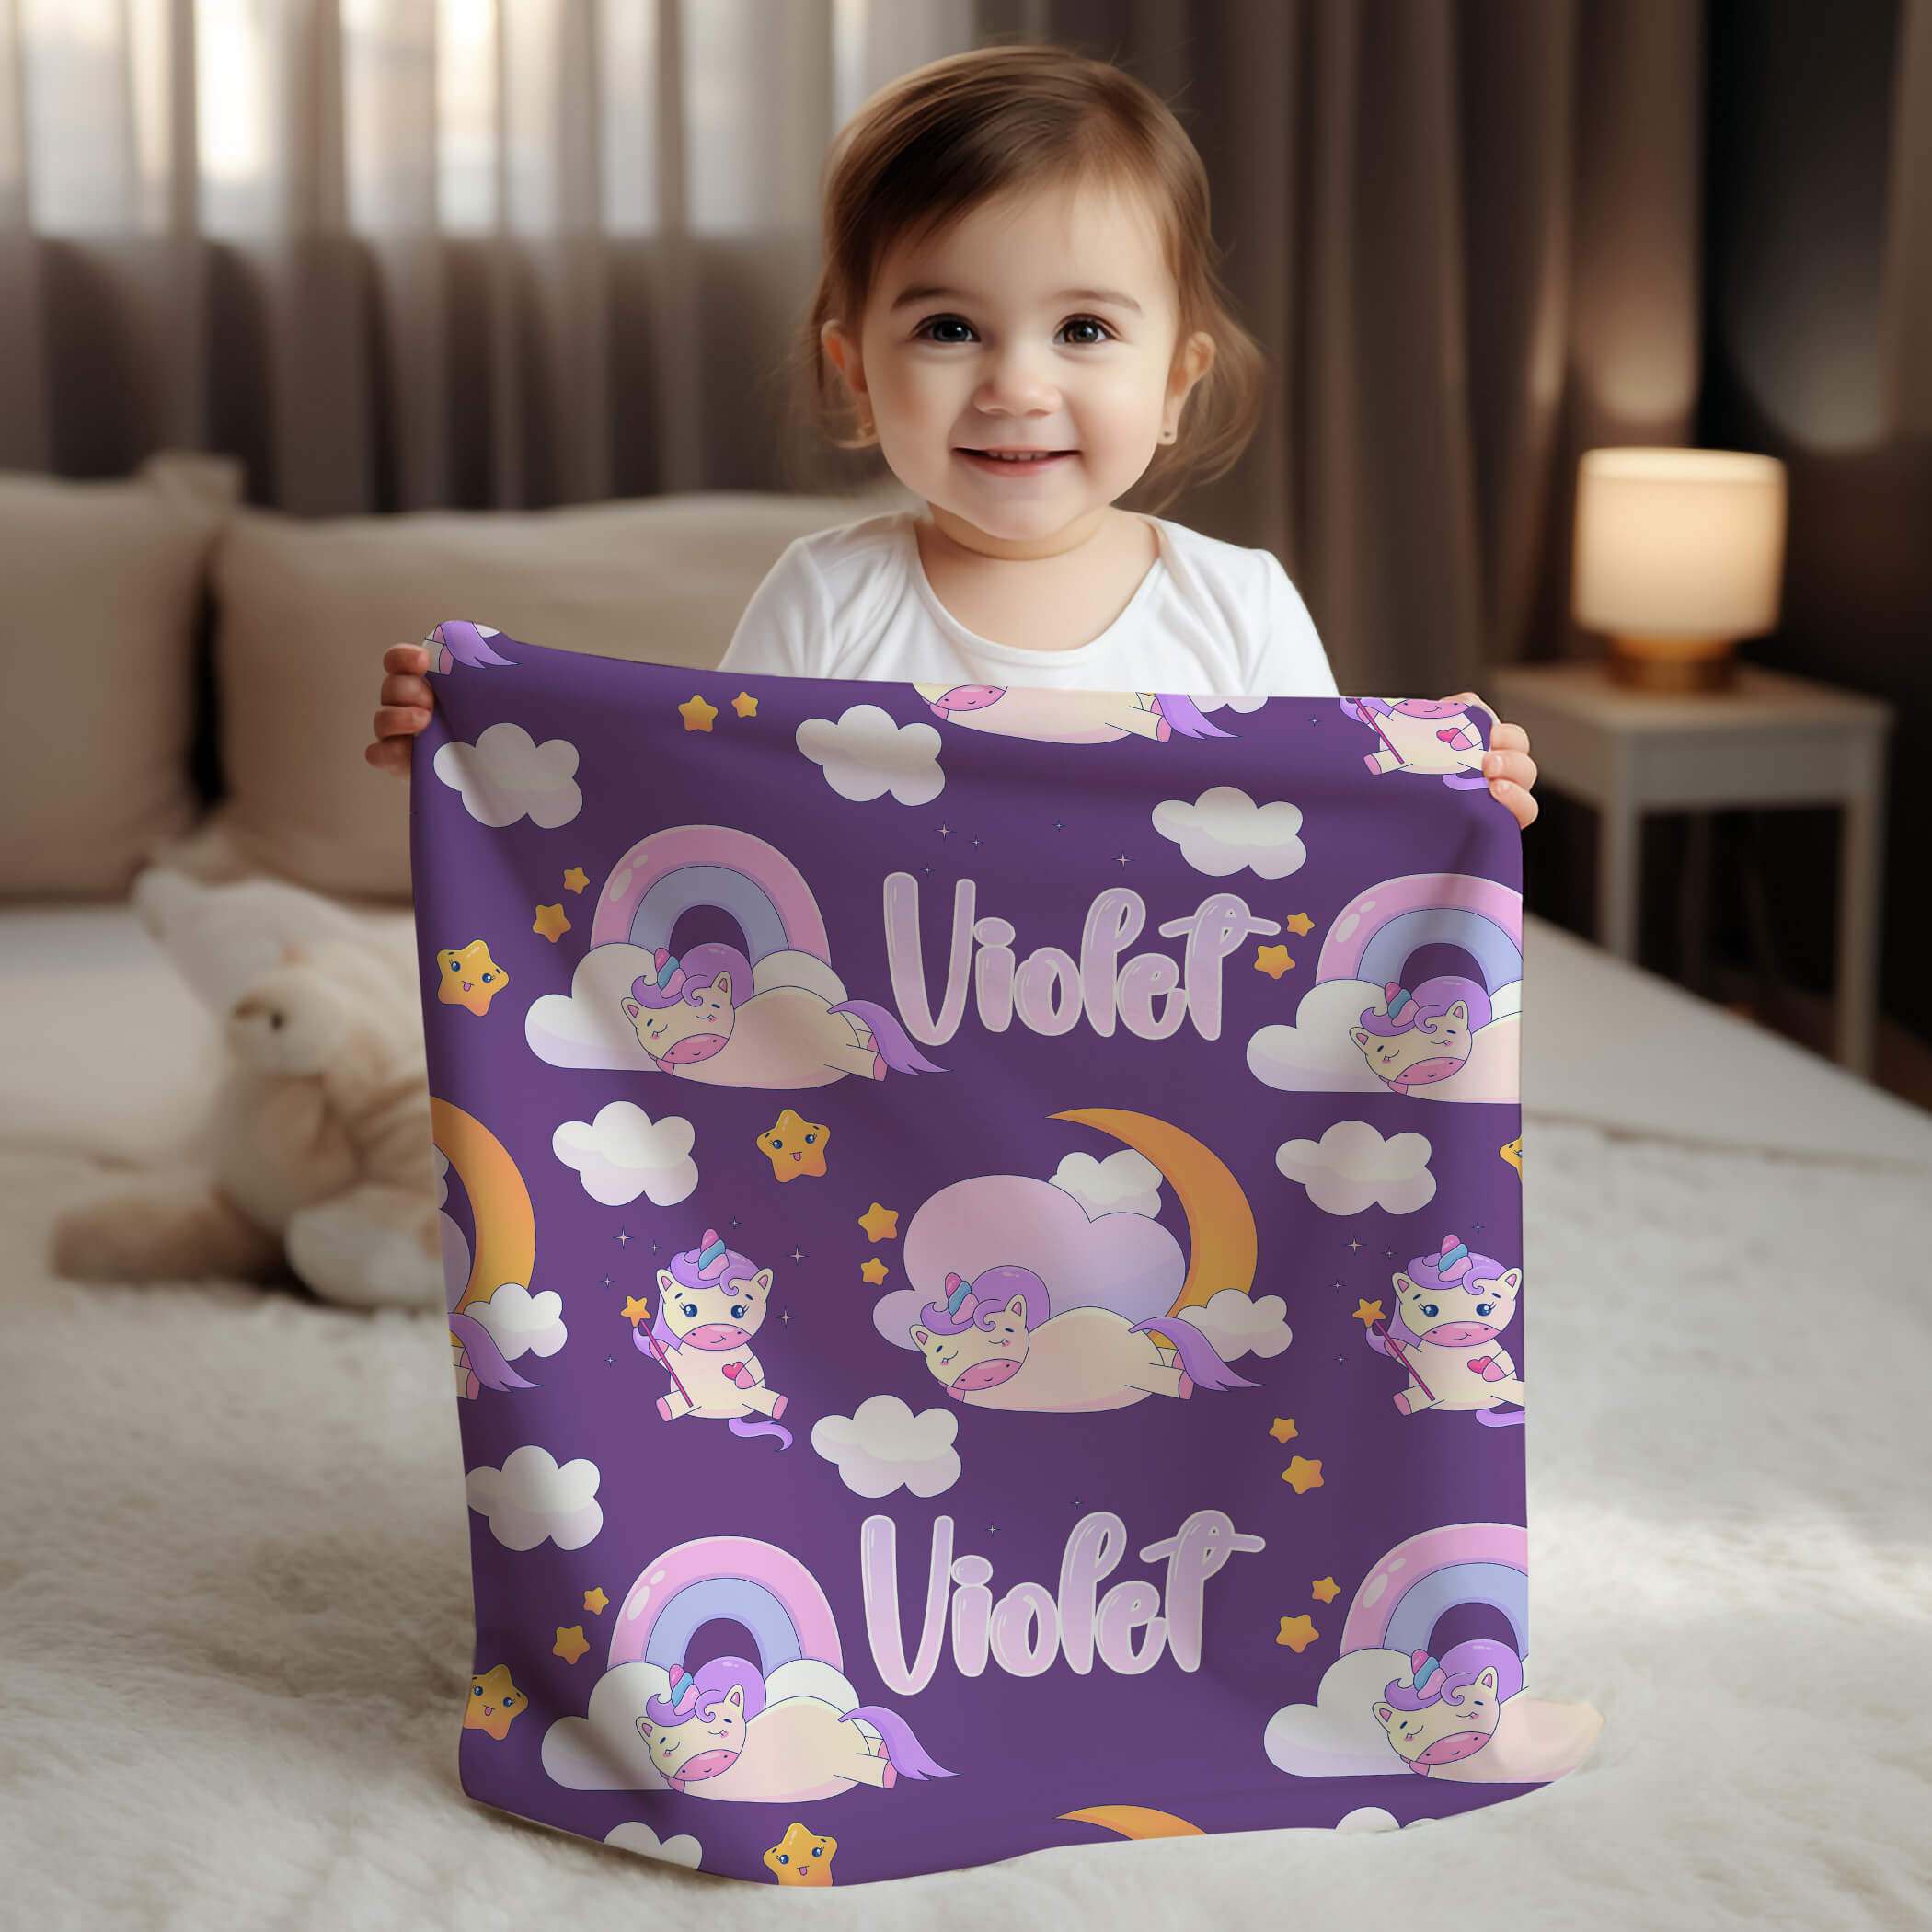 Personalized Name Blanket - Happy Unicorn